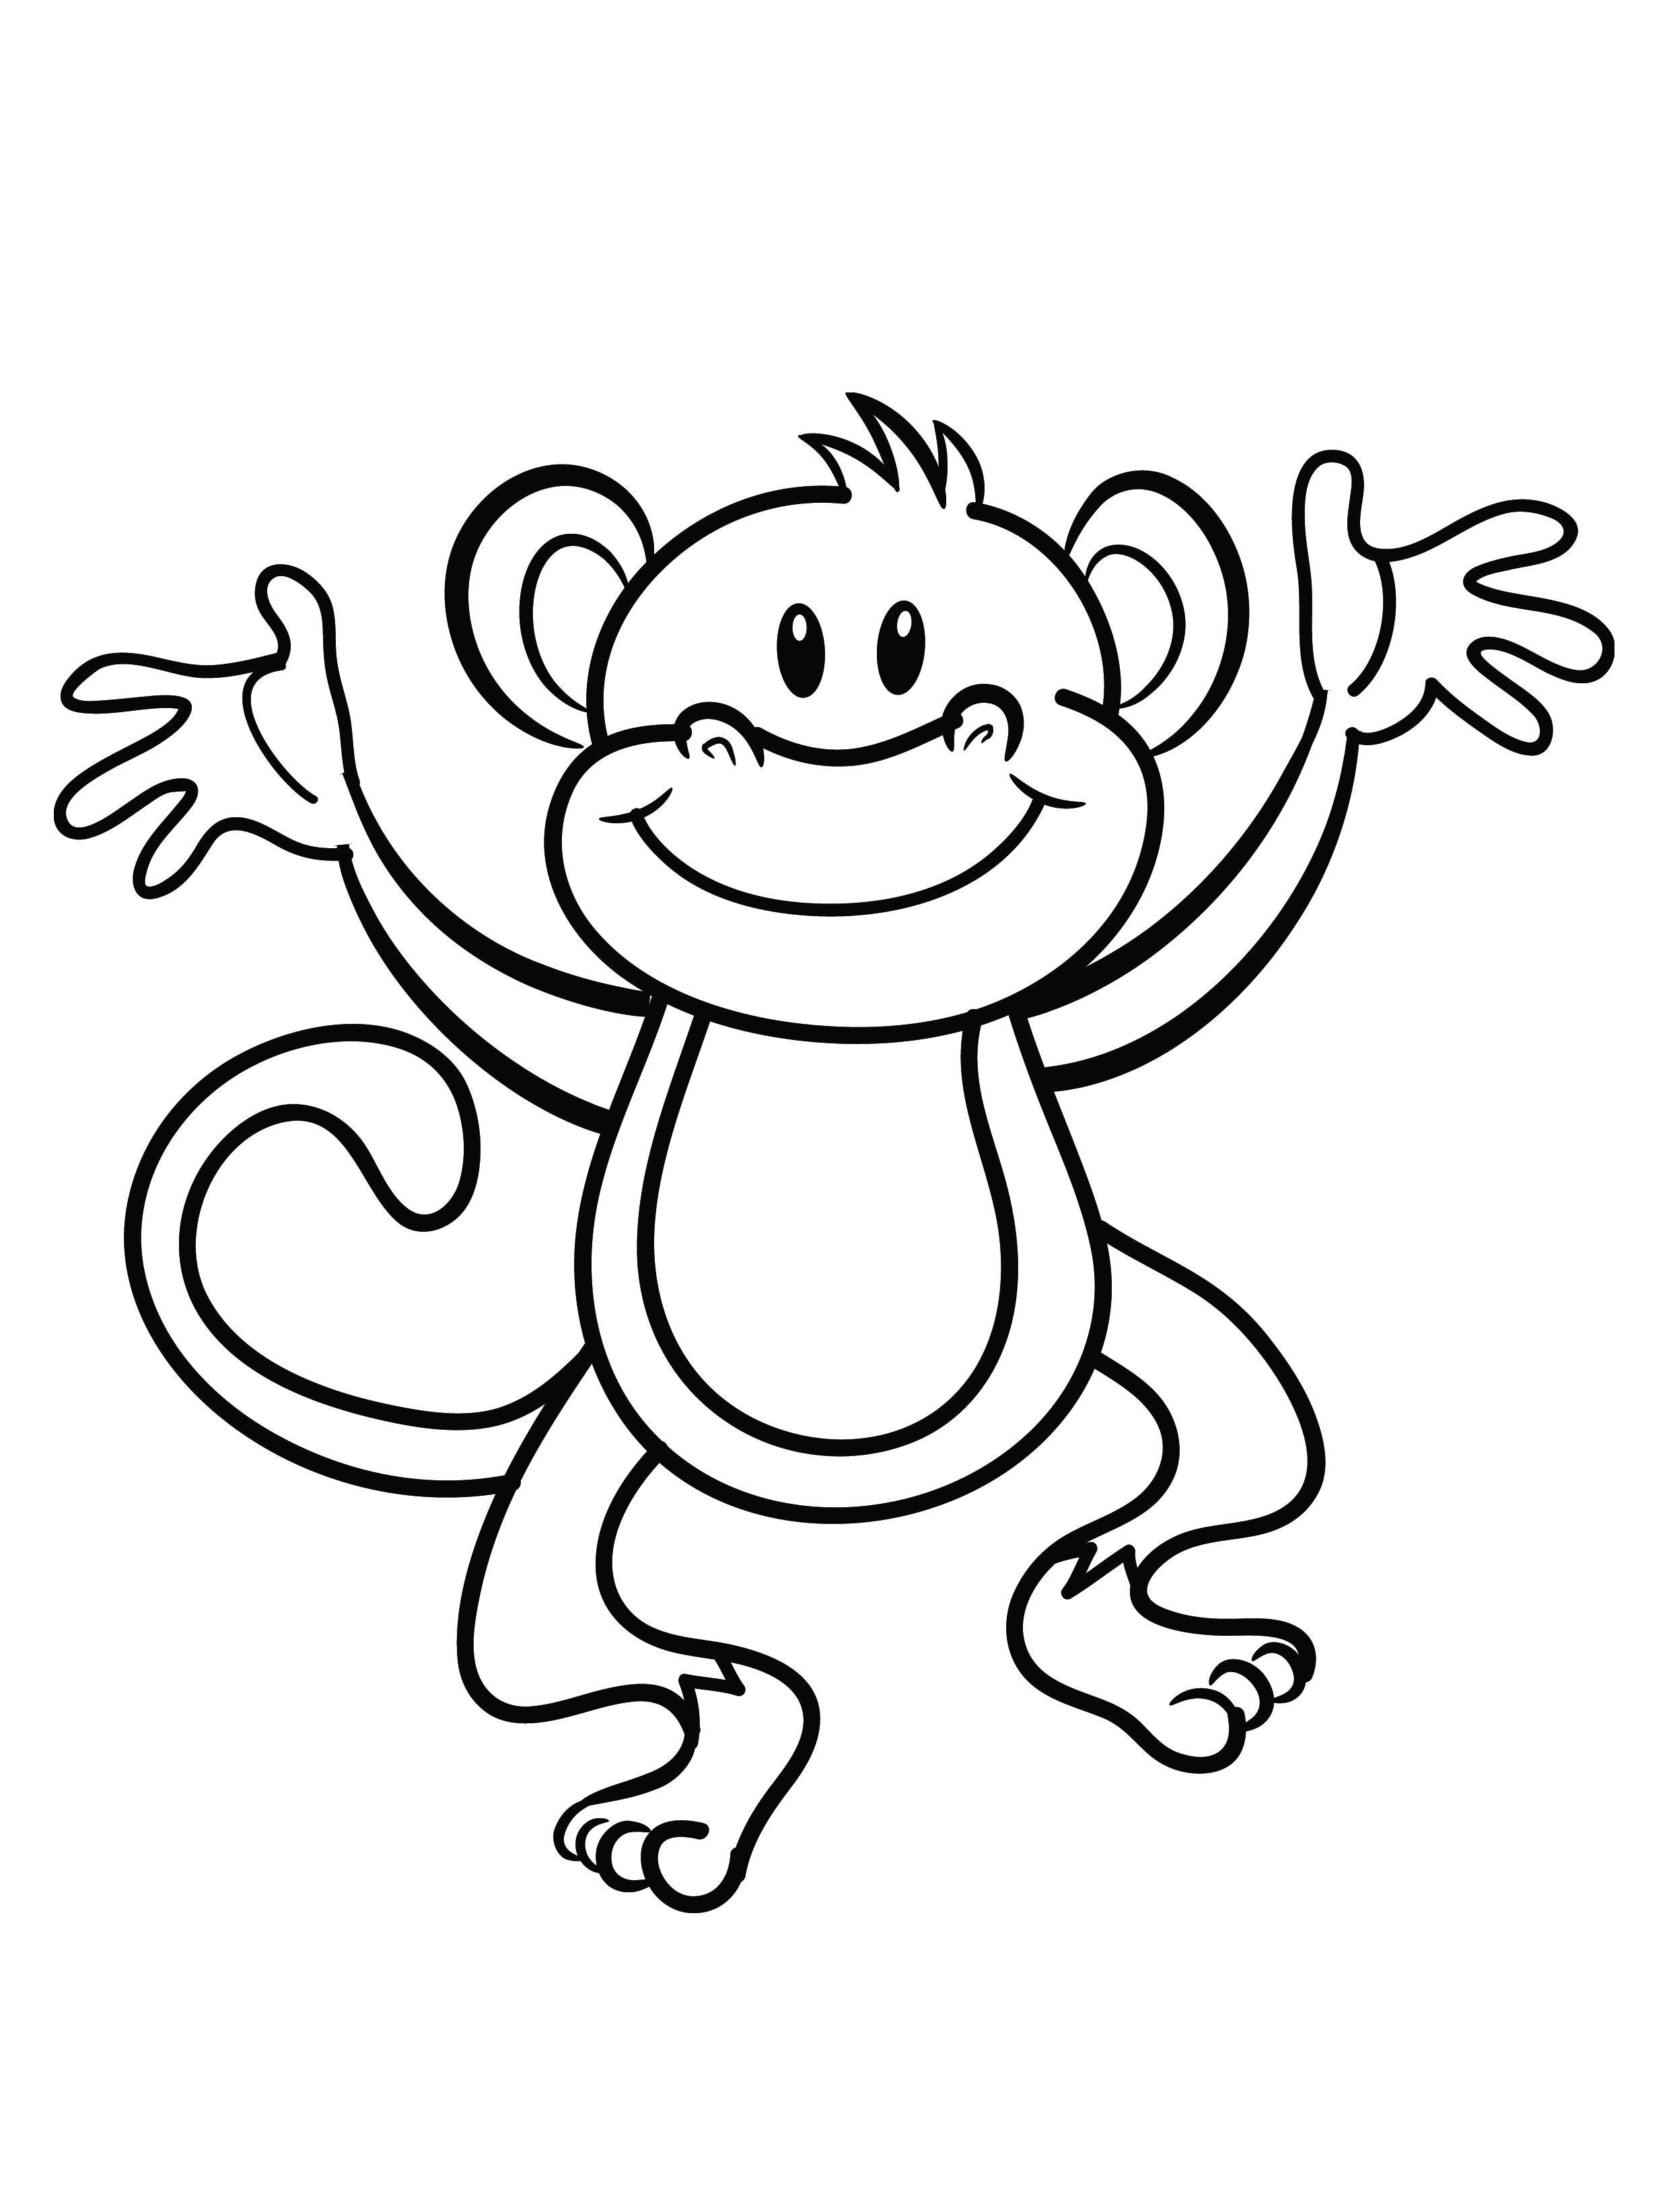 Monkey pencil drawing.